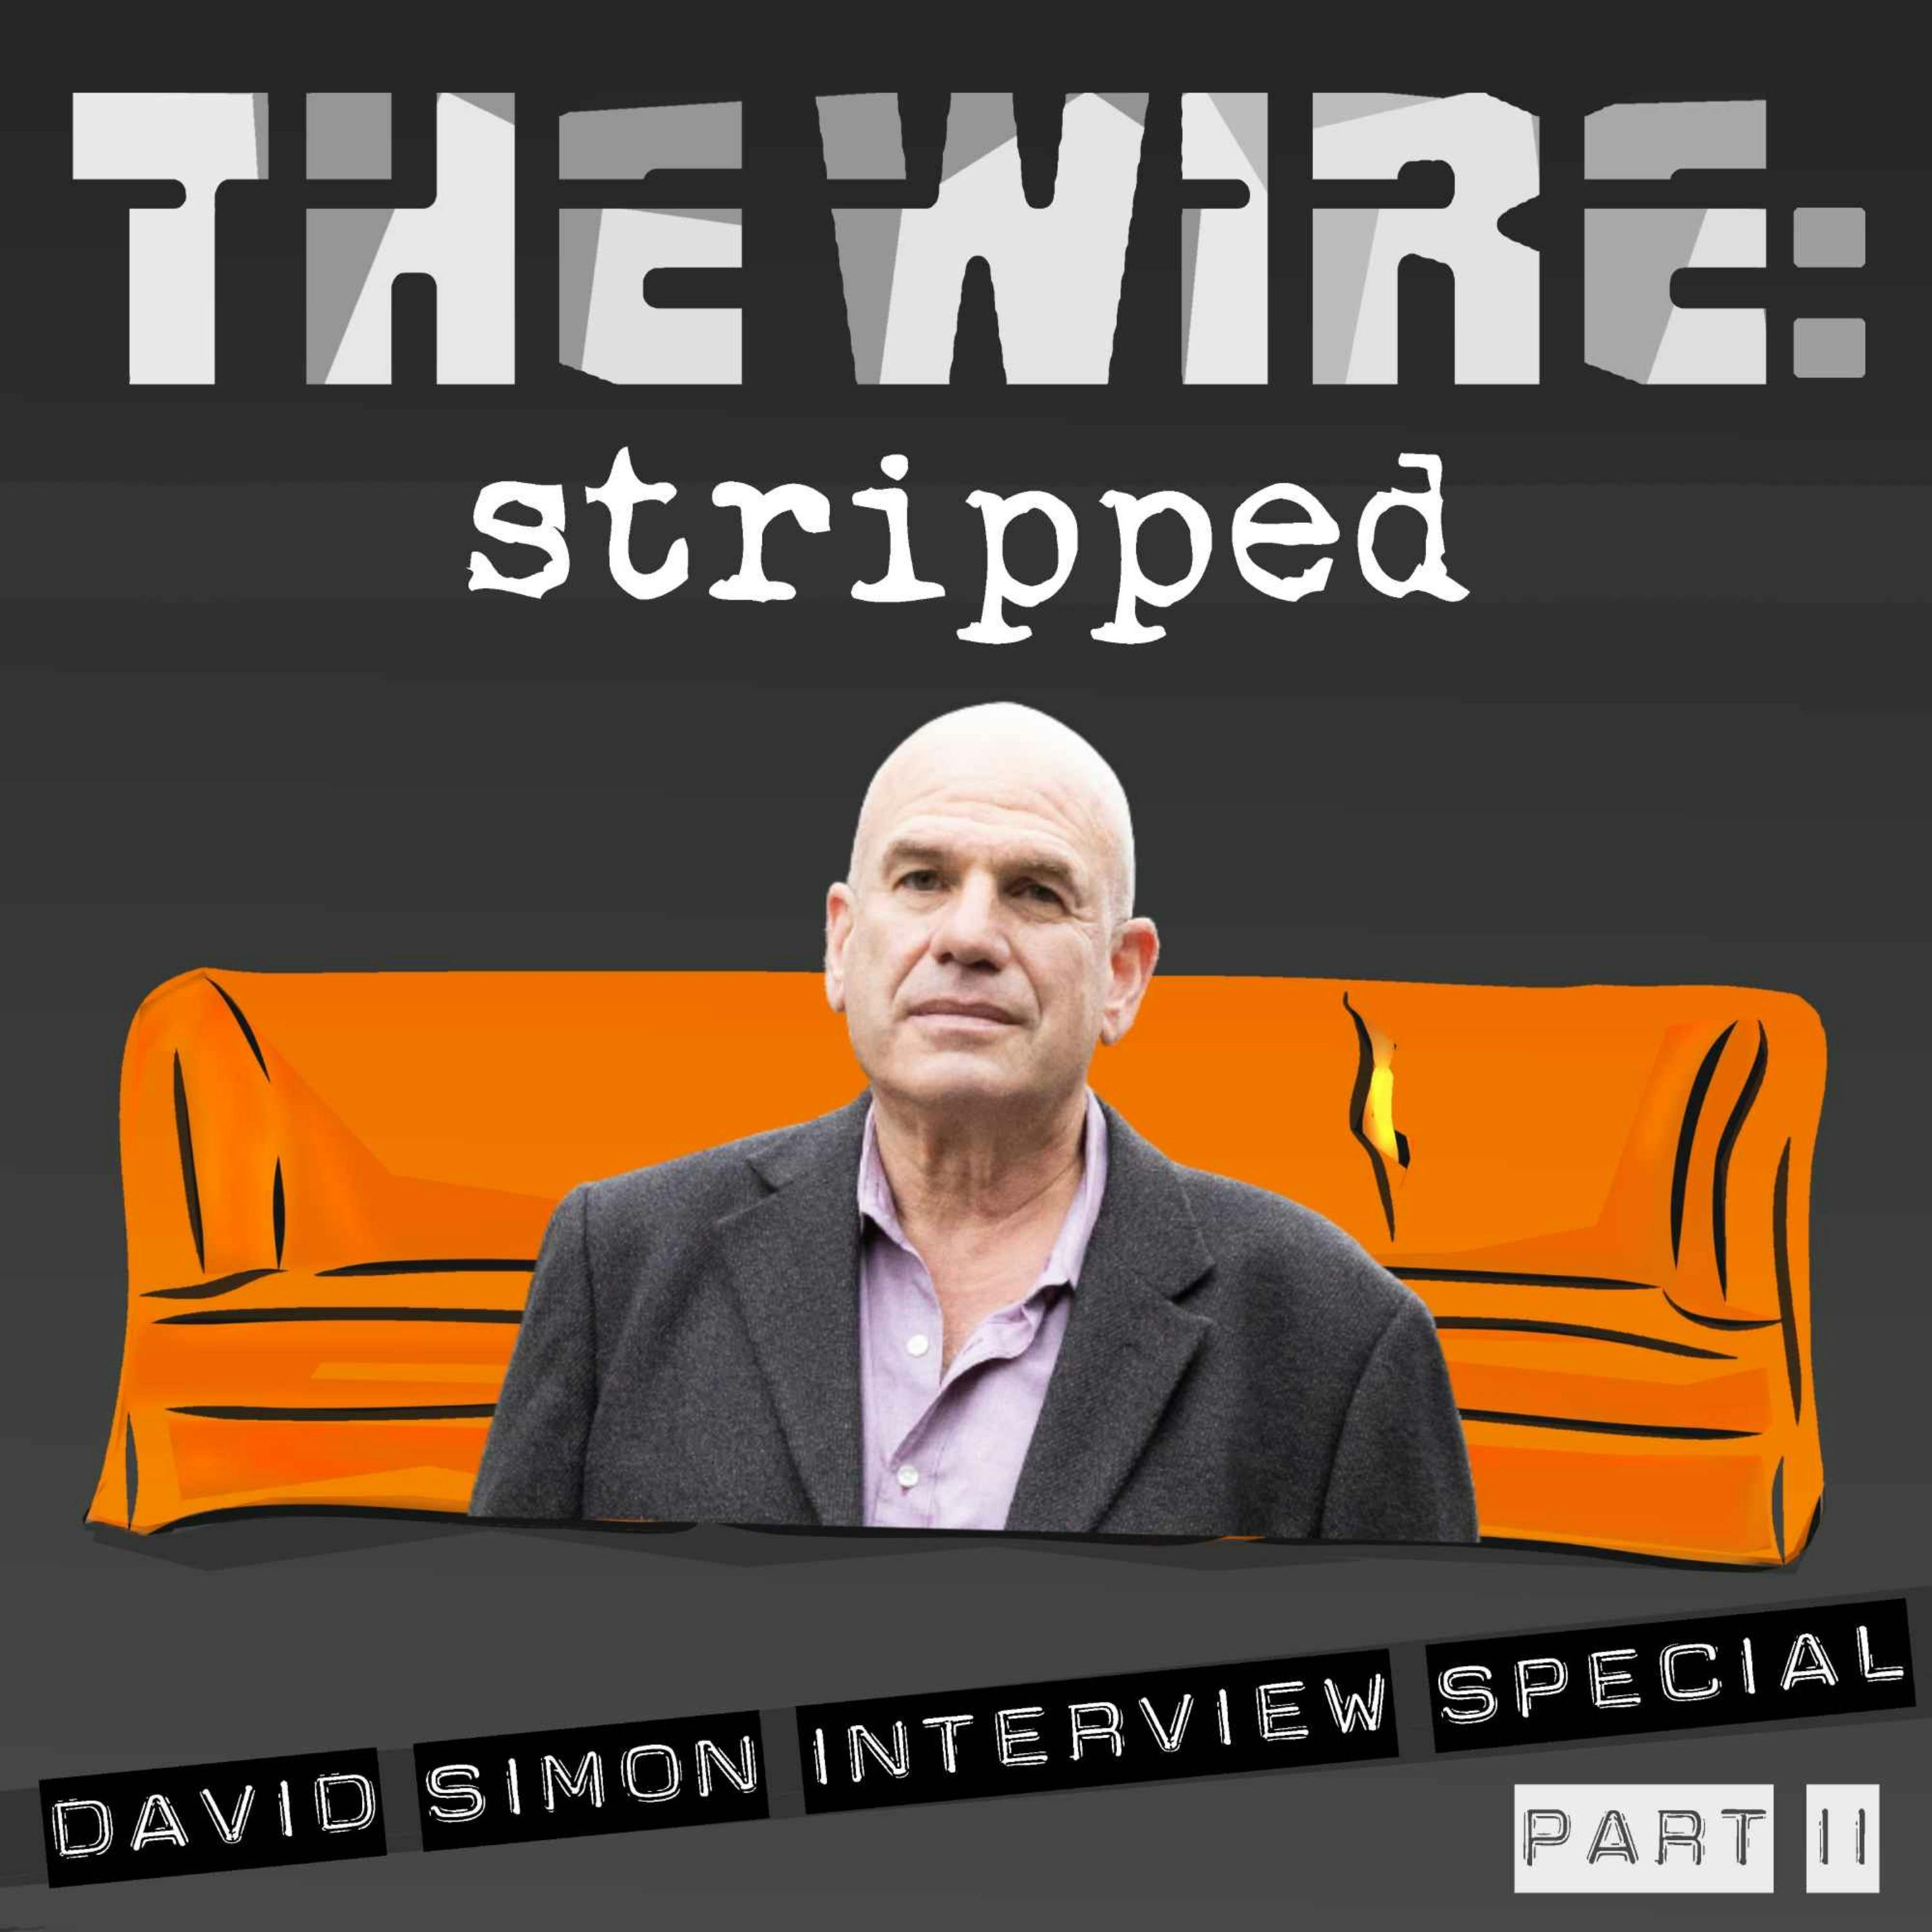 David Simon Interview Special: Part II